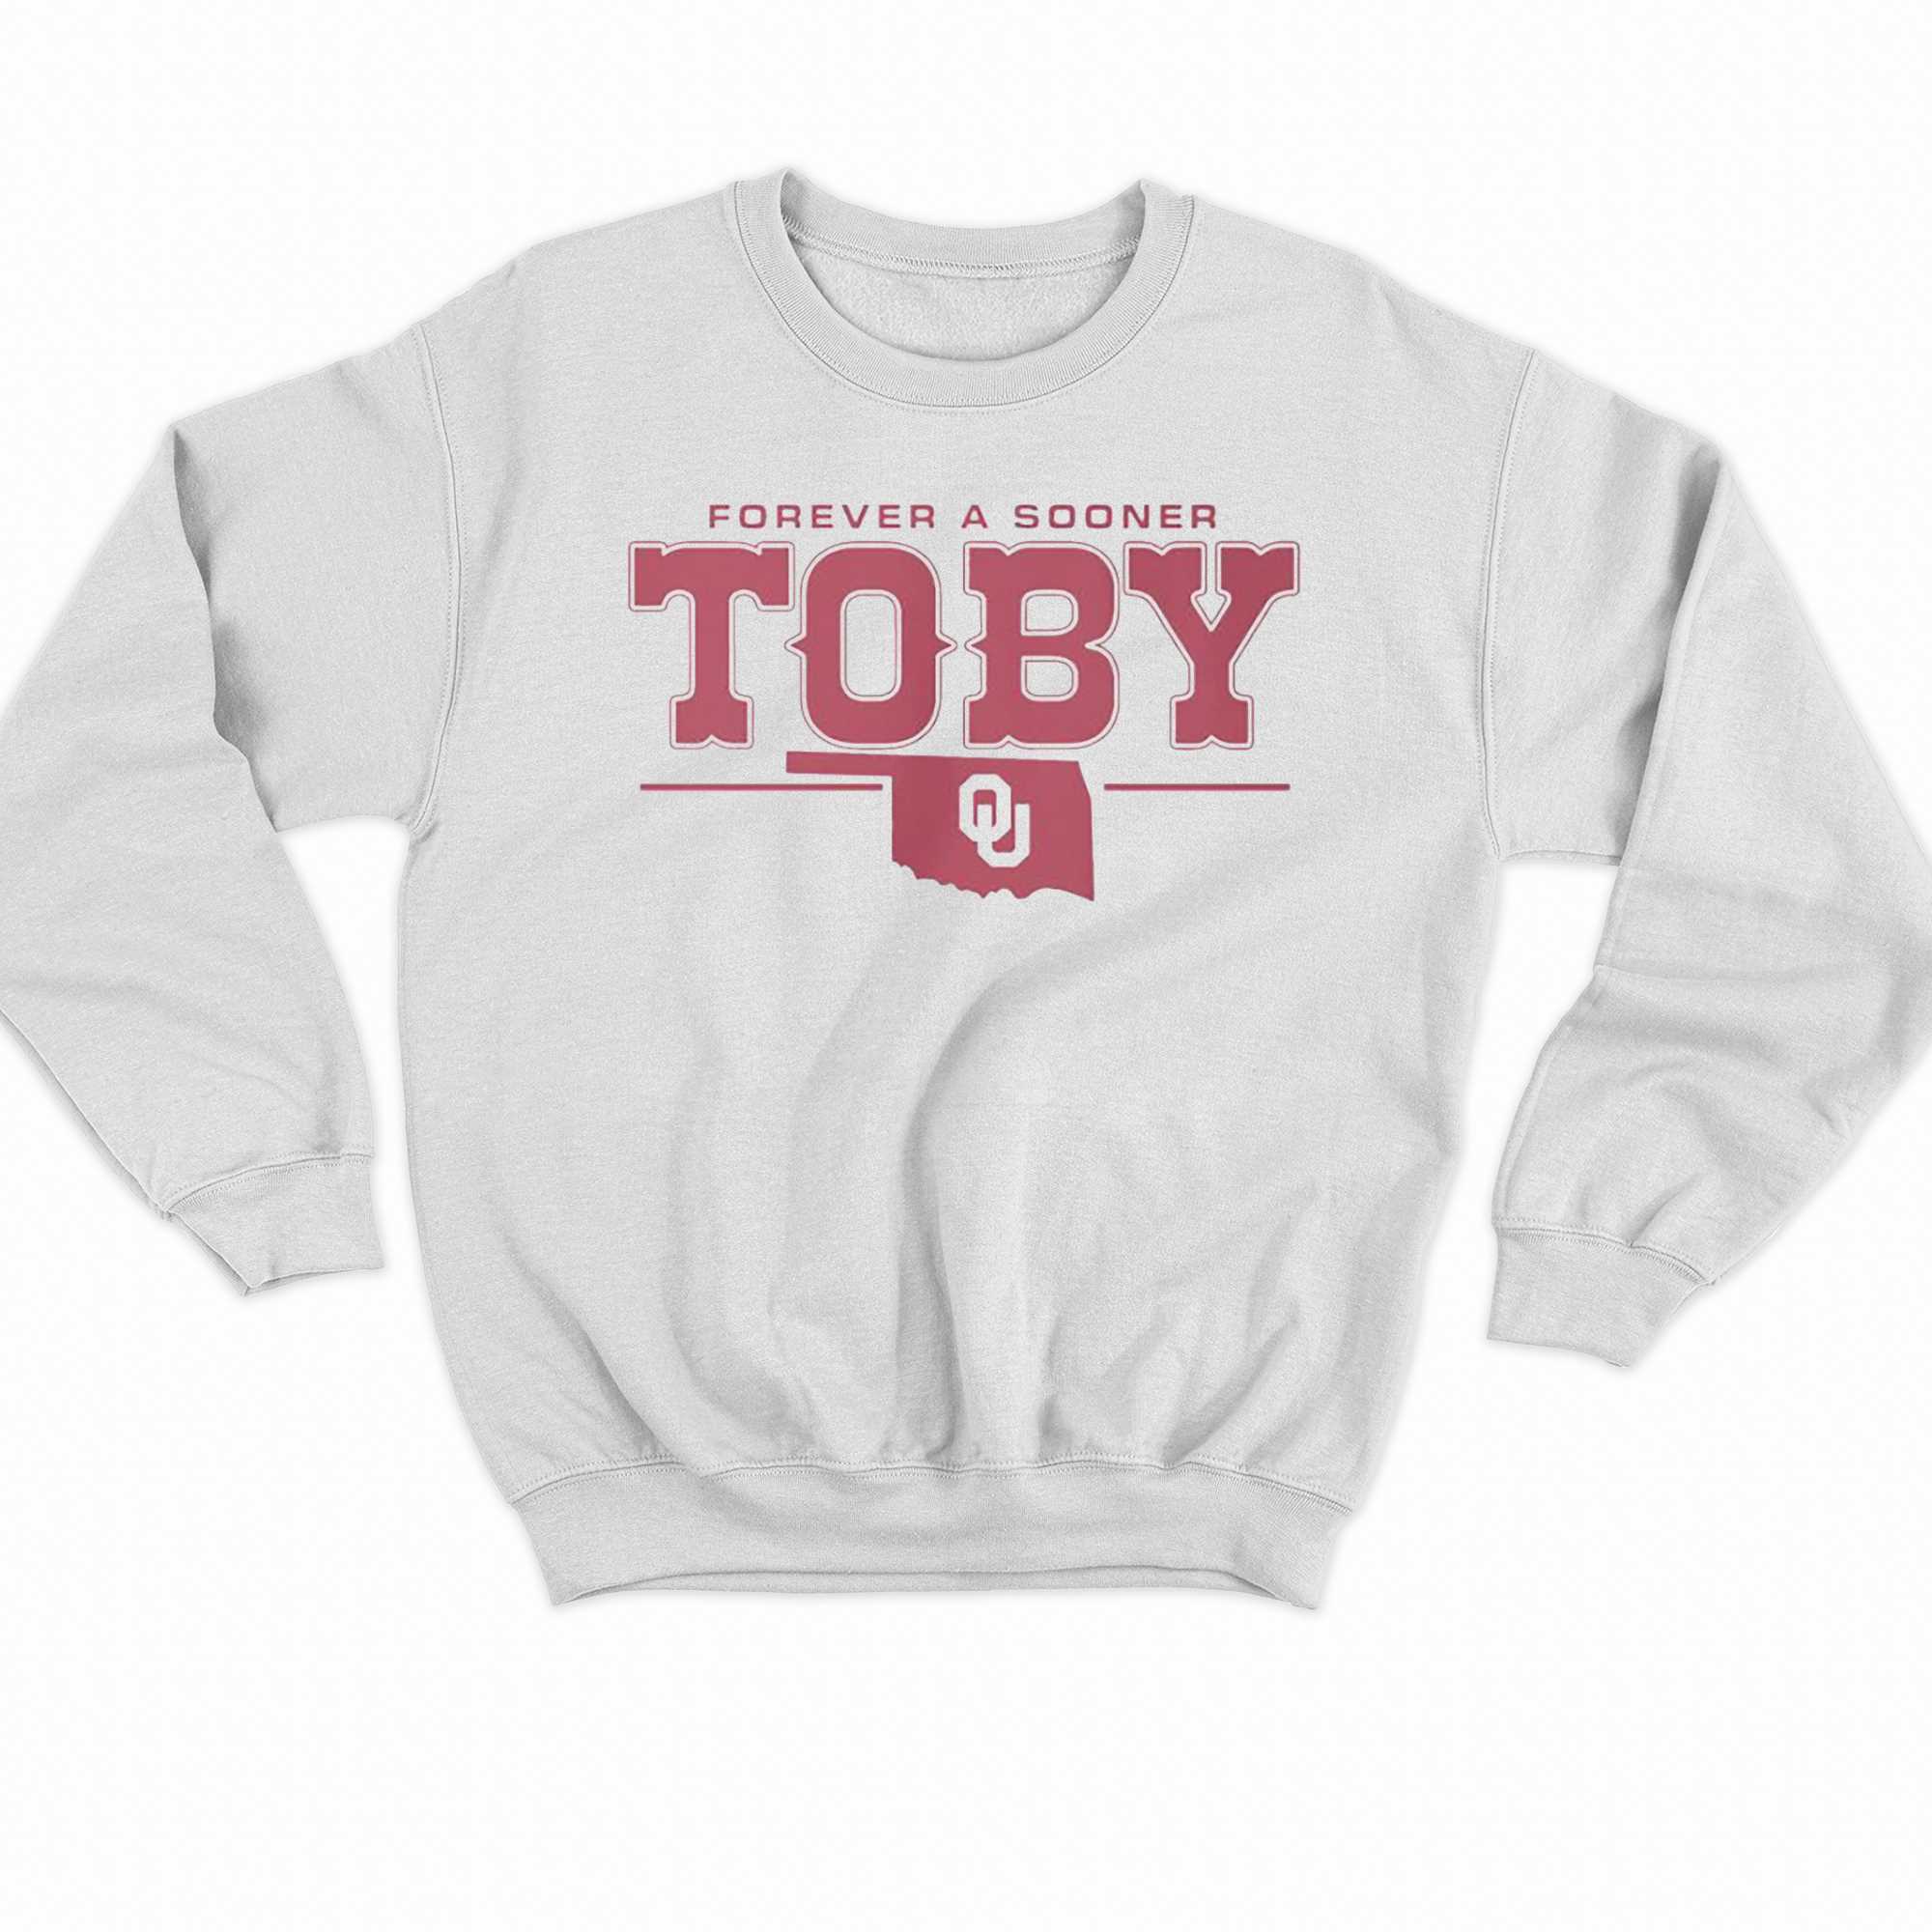 Forever A Sooner Toby Shirt 